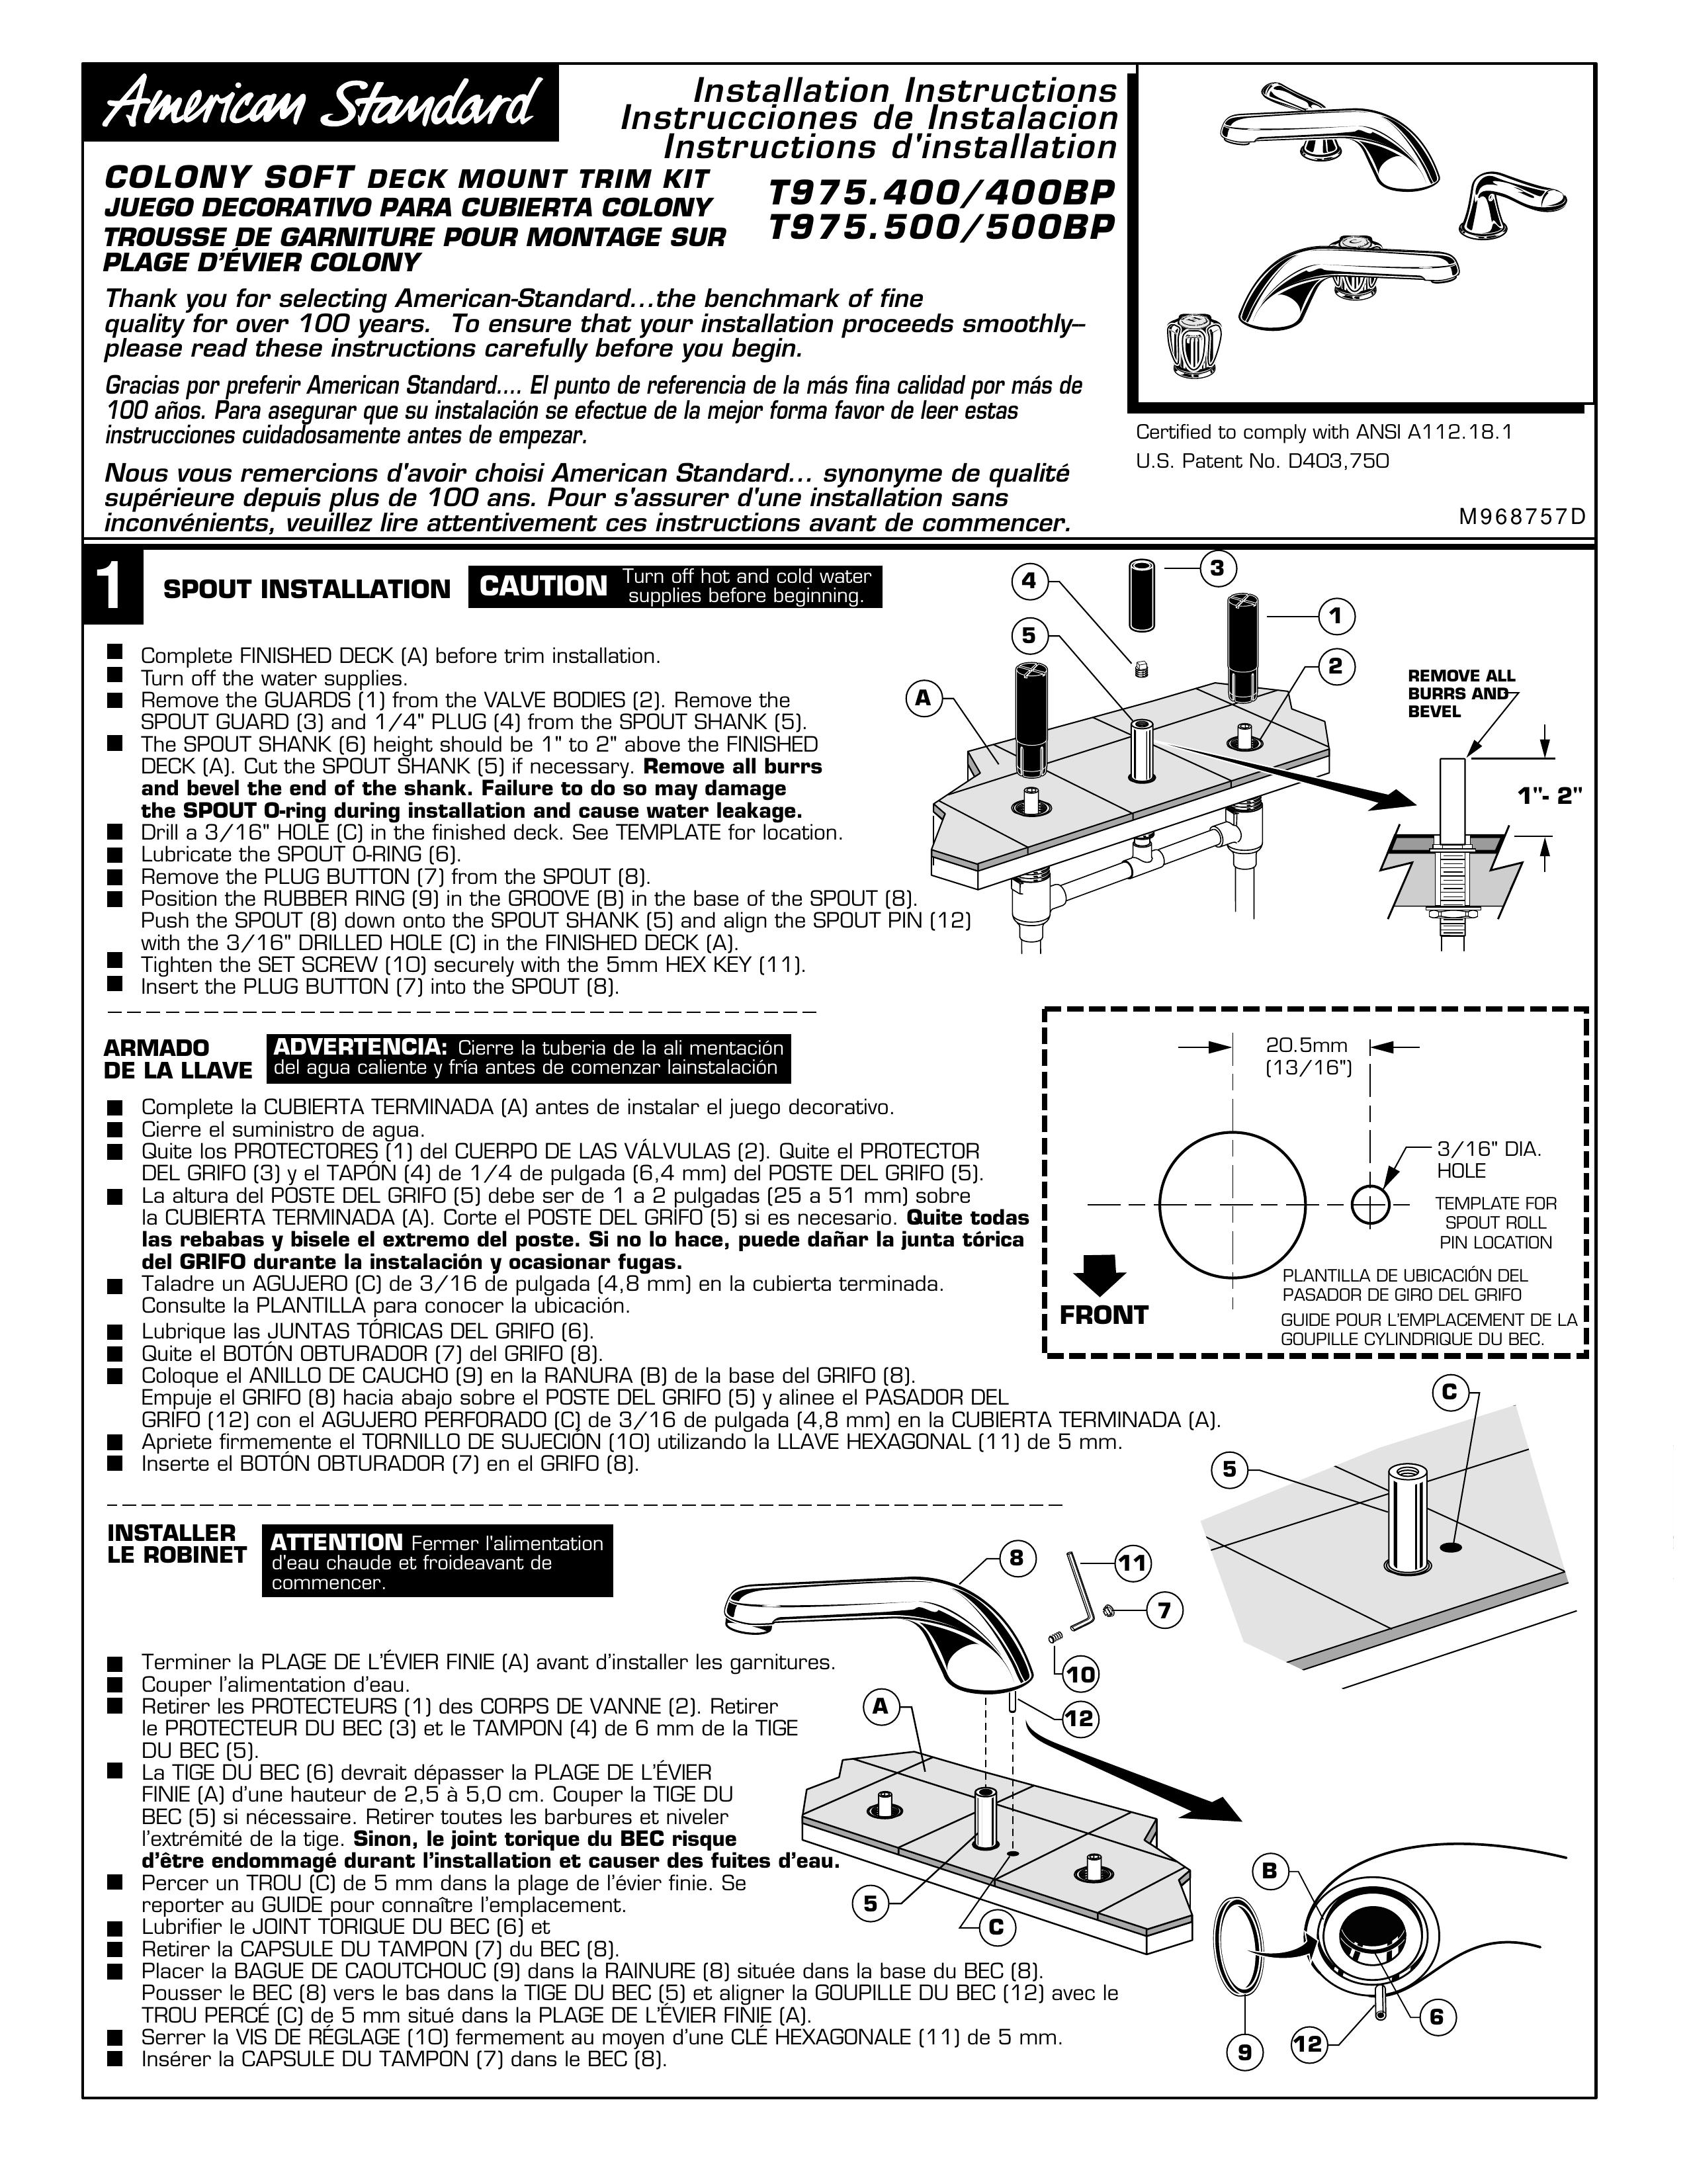 American Standard M968757D Marine Sanitation System User Manual